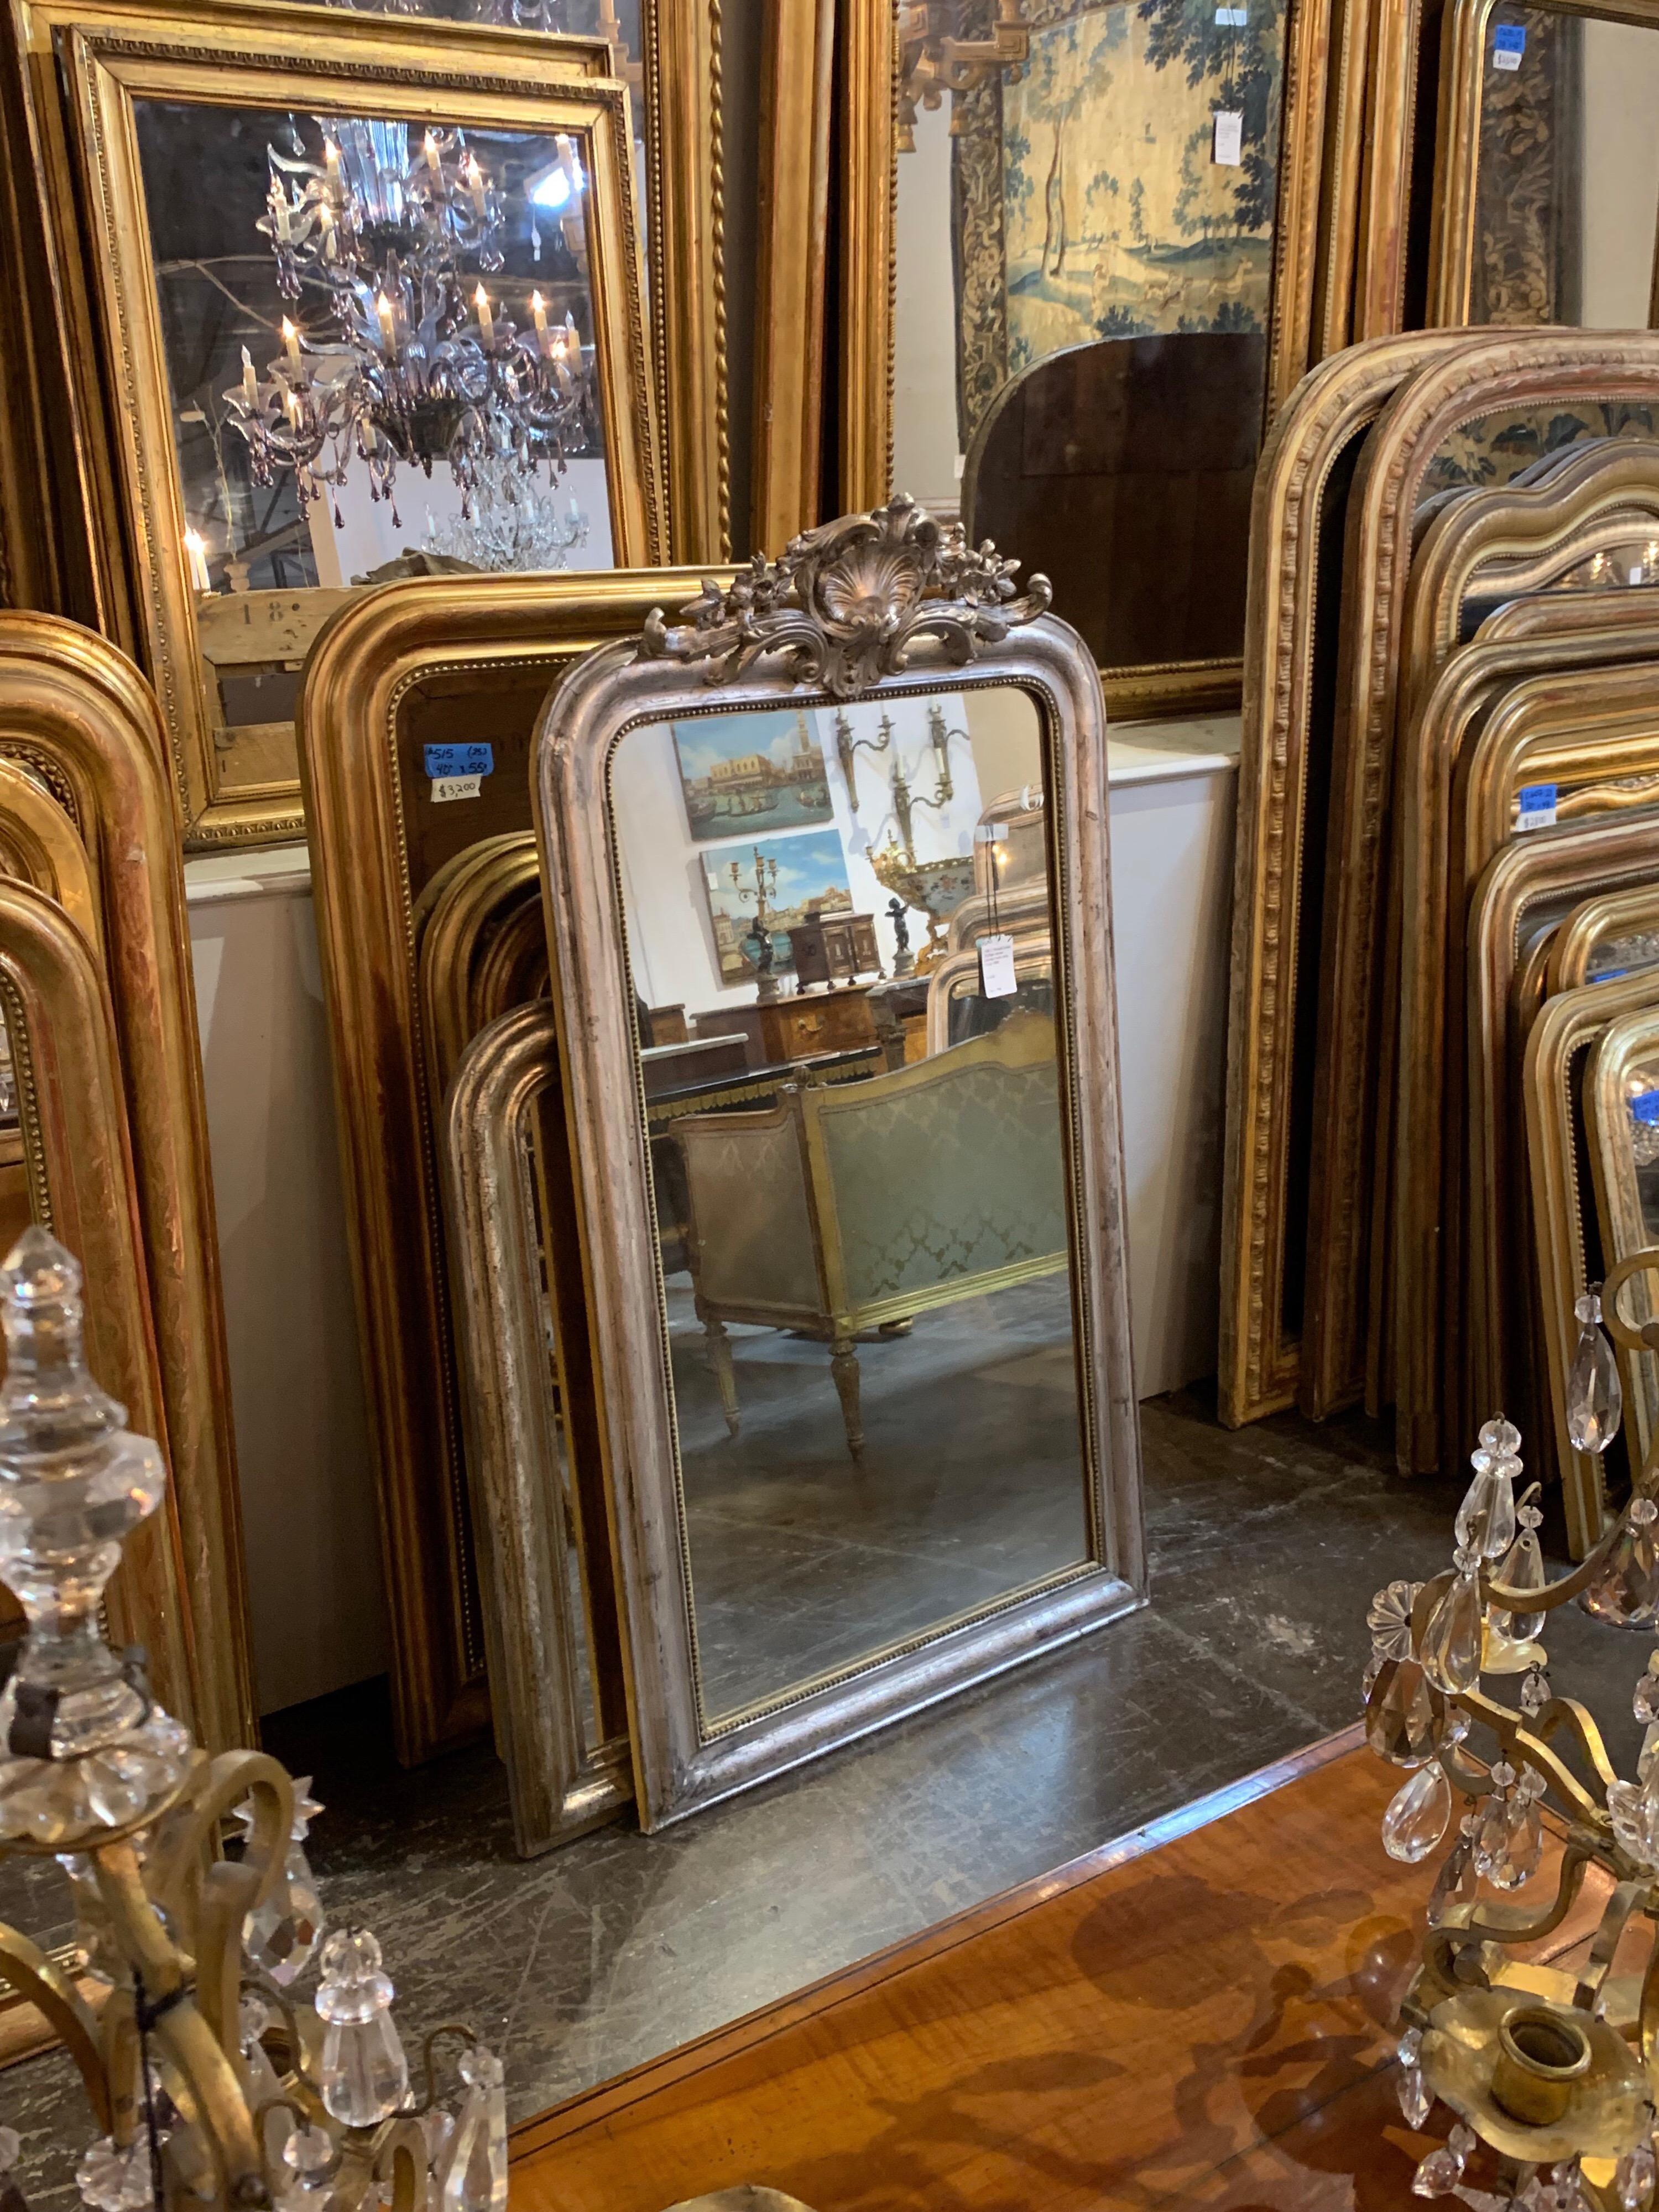 Wood 19th Century Louis Phillipe Mirror with Crest